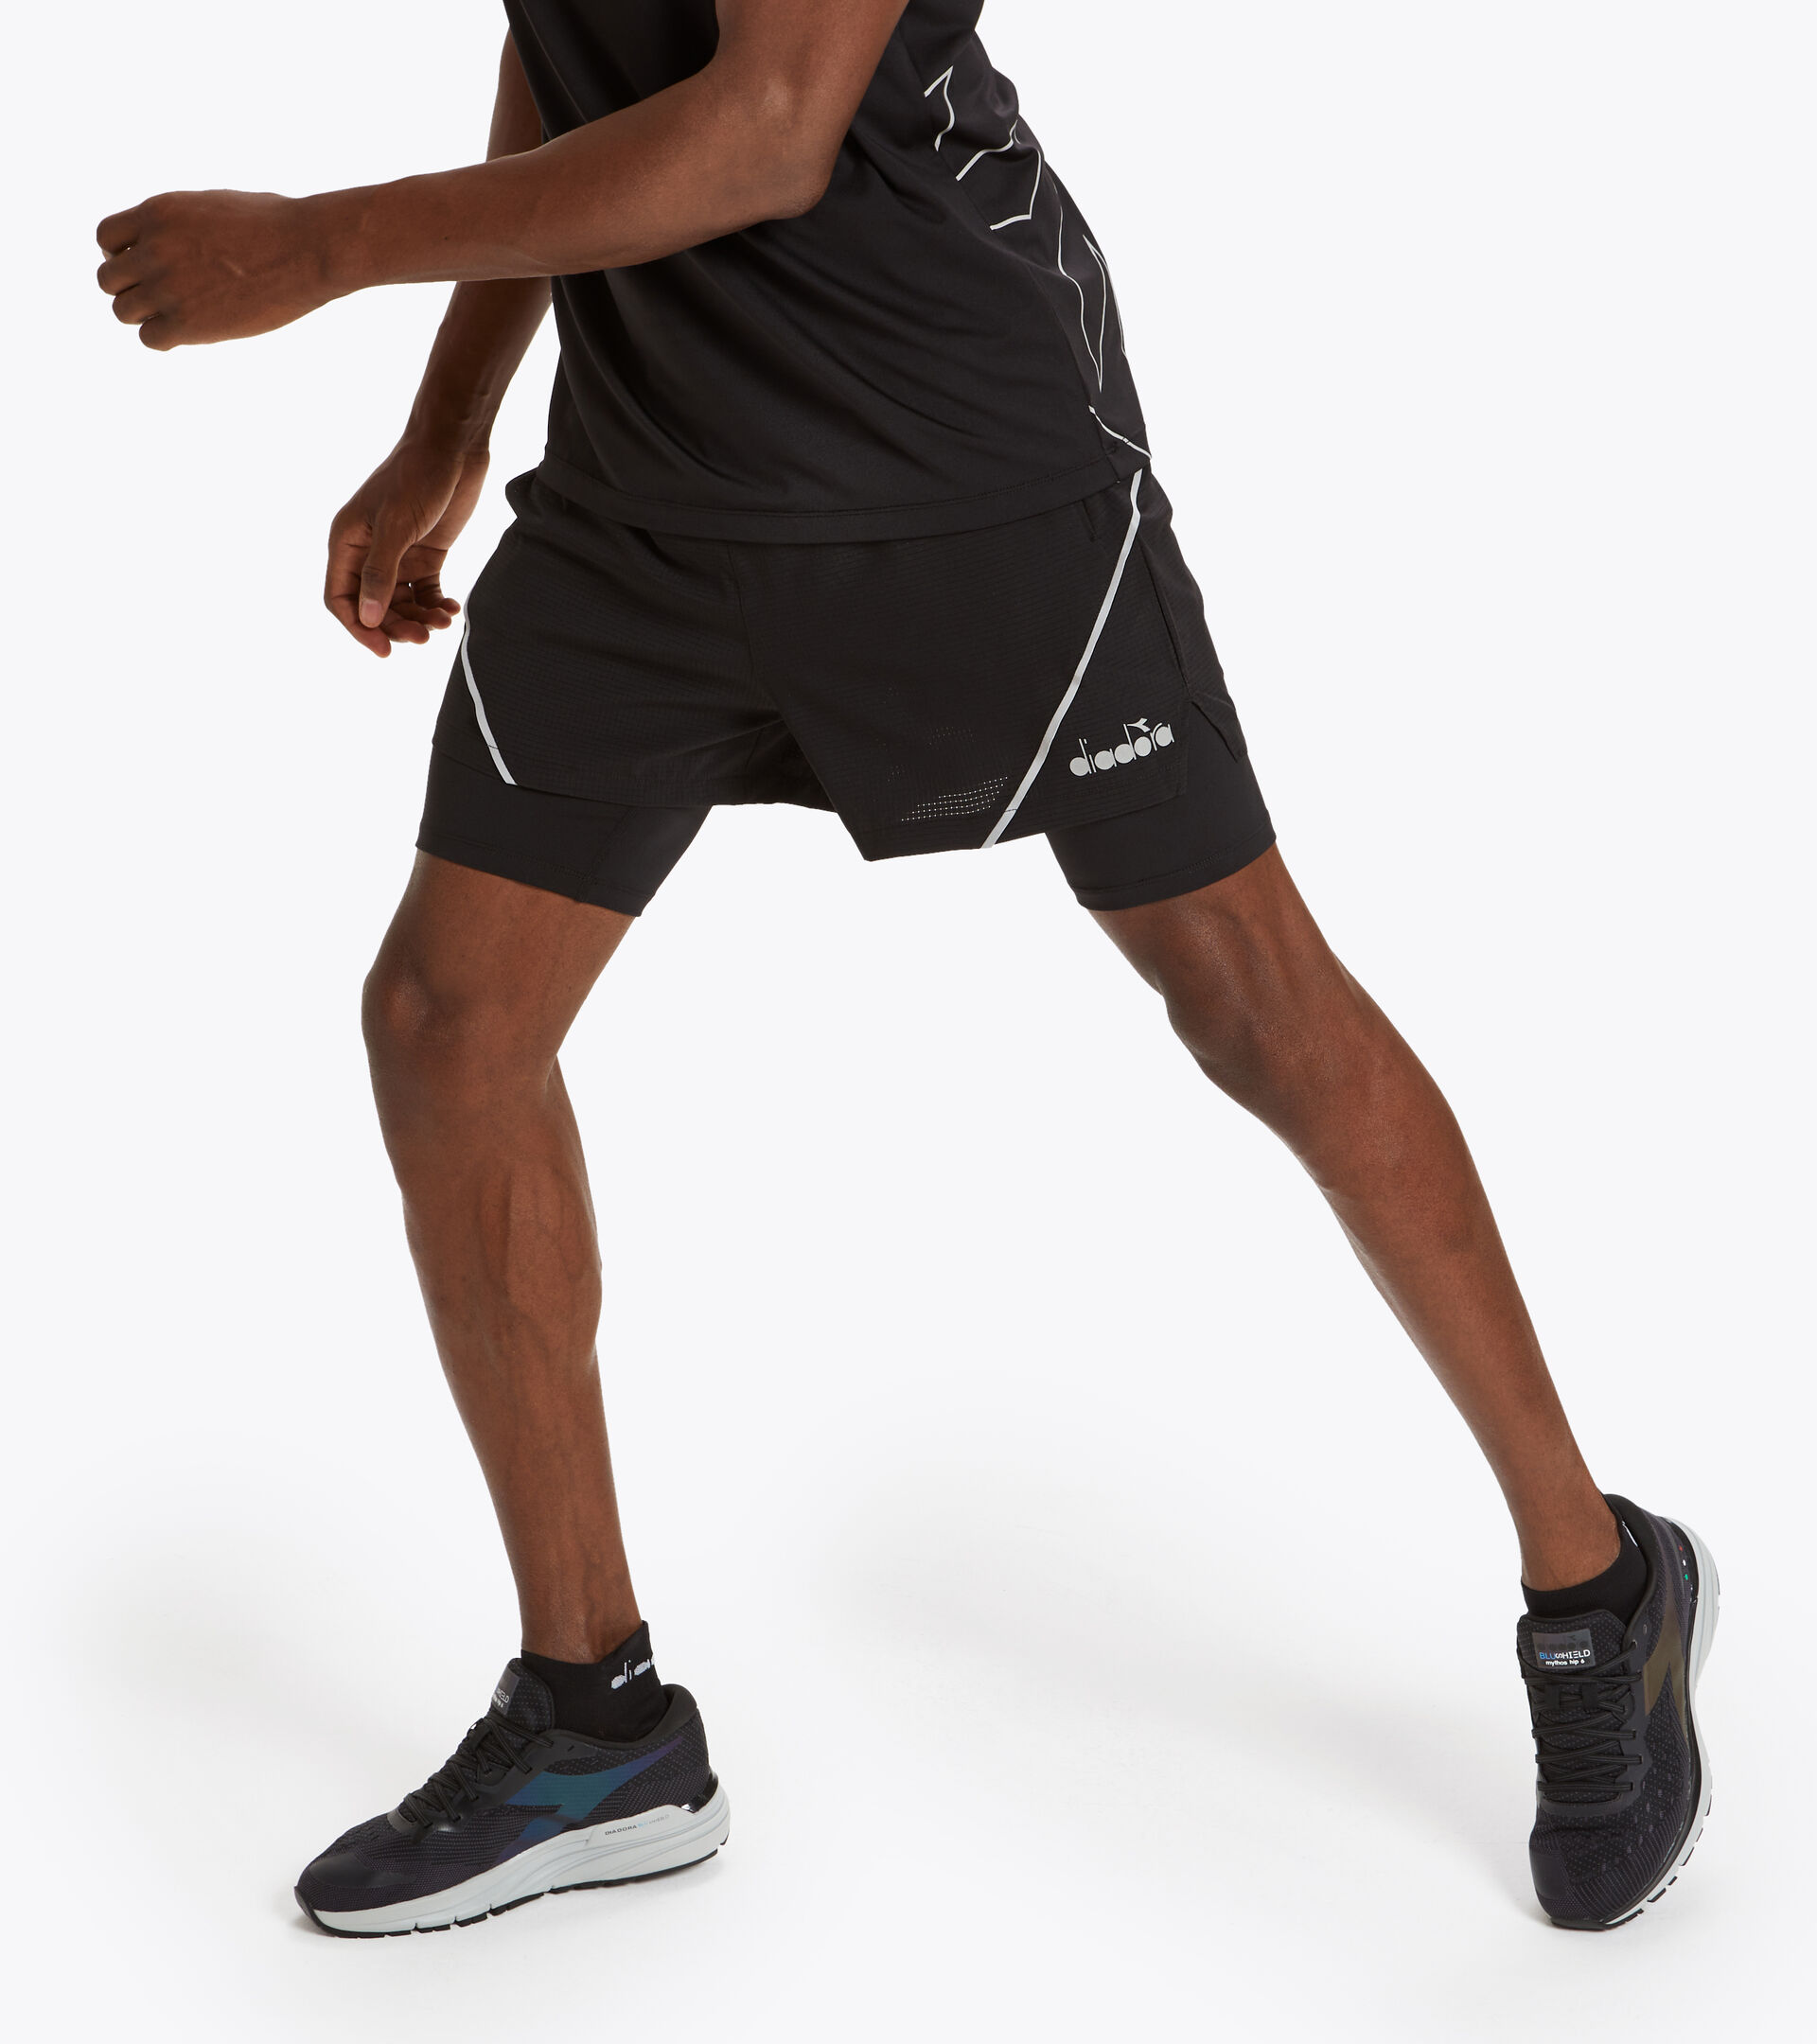 Running shorts - Men DOUBLE LAYER BERMUDA BLACK - Diadora